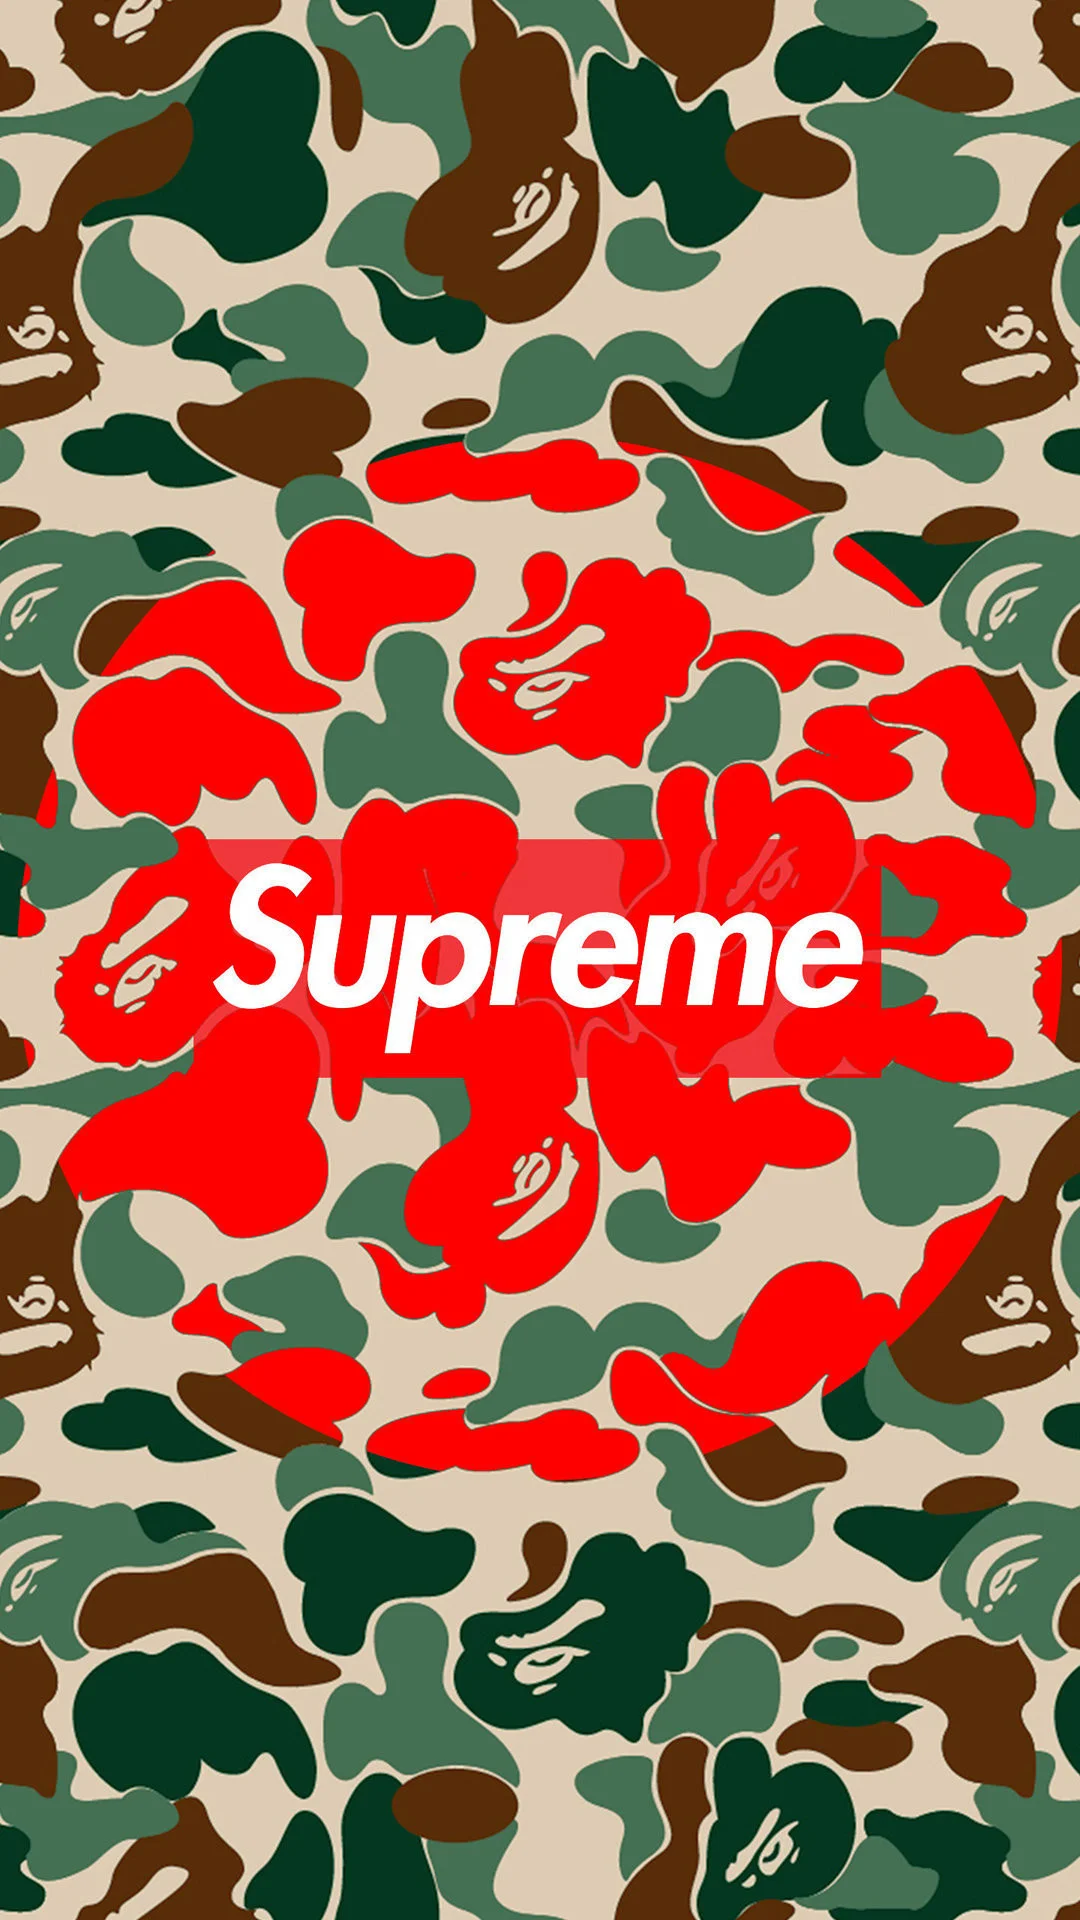 Supreme Gucci Wallpaper created by nenadh2k #gucci #supreme #newyork #brand  #